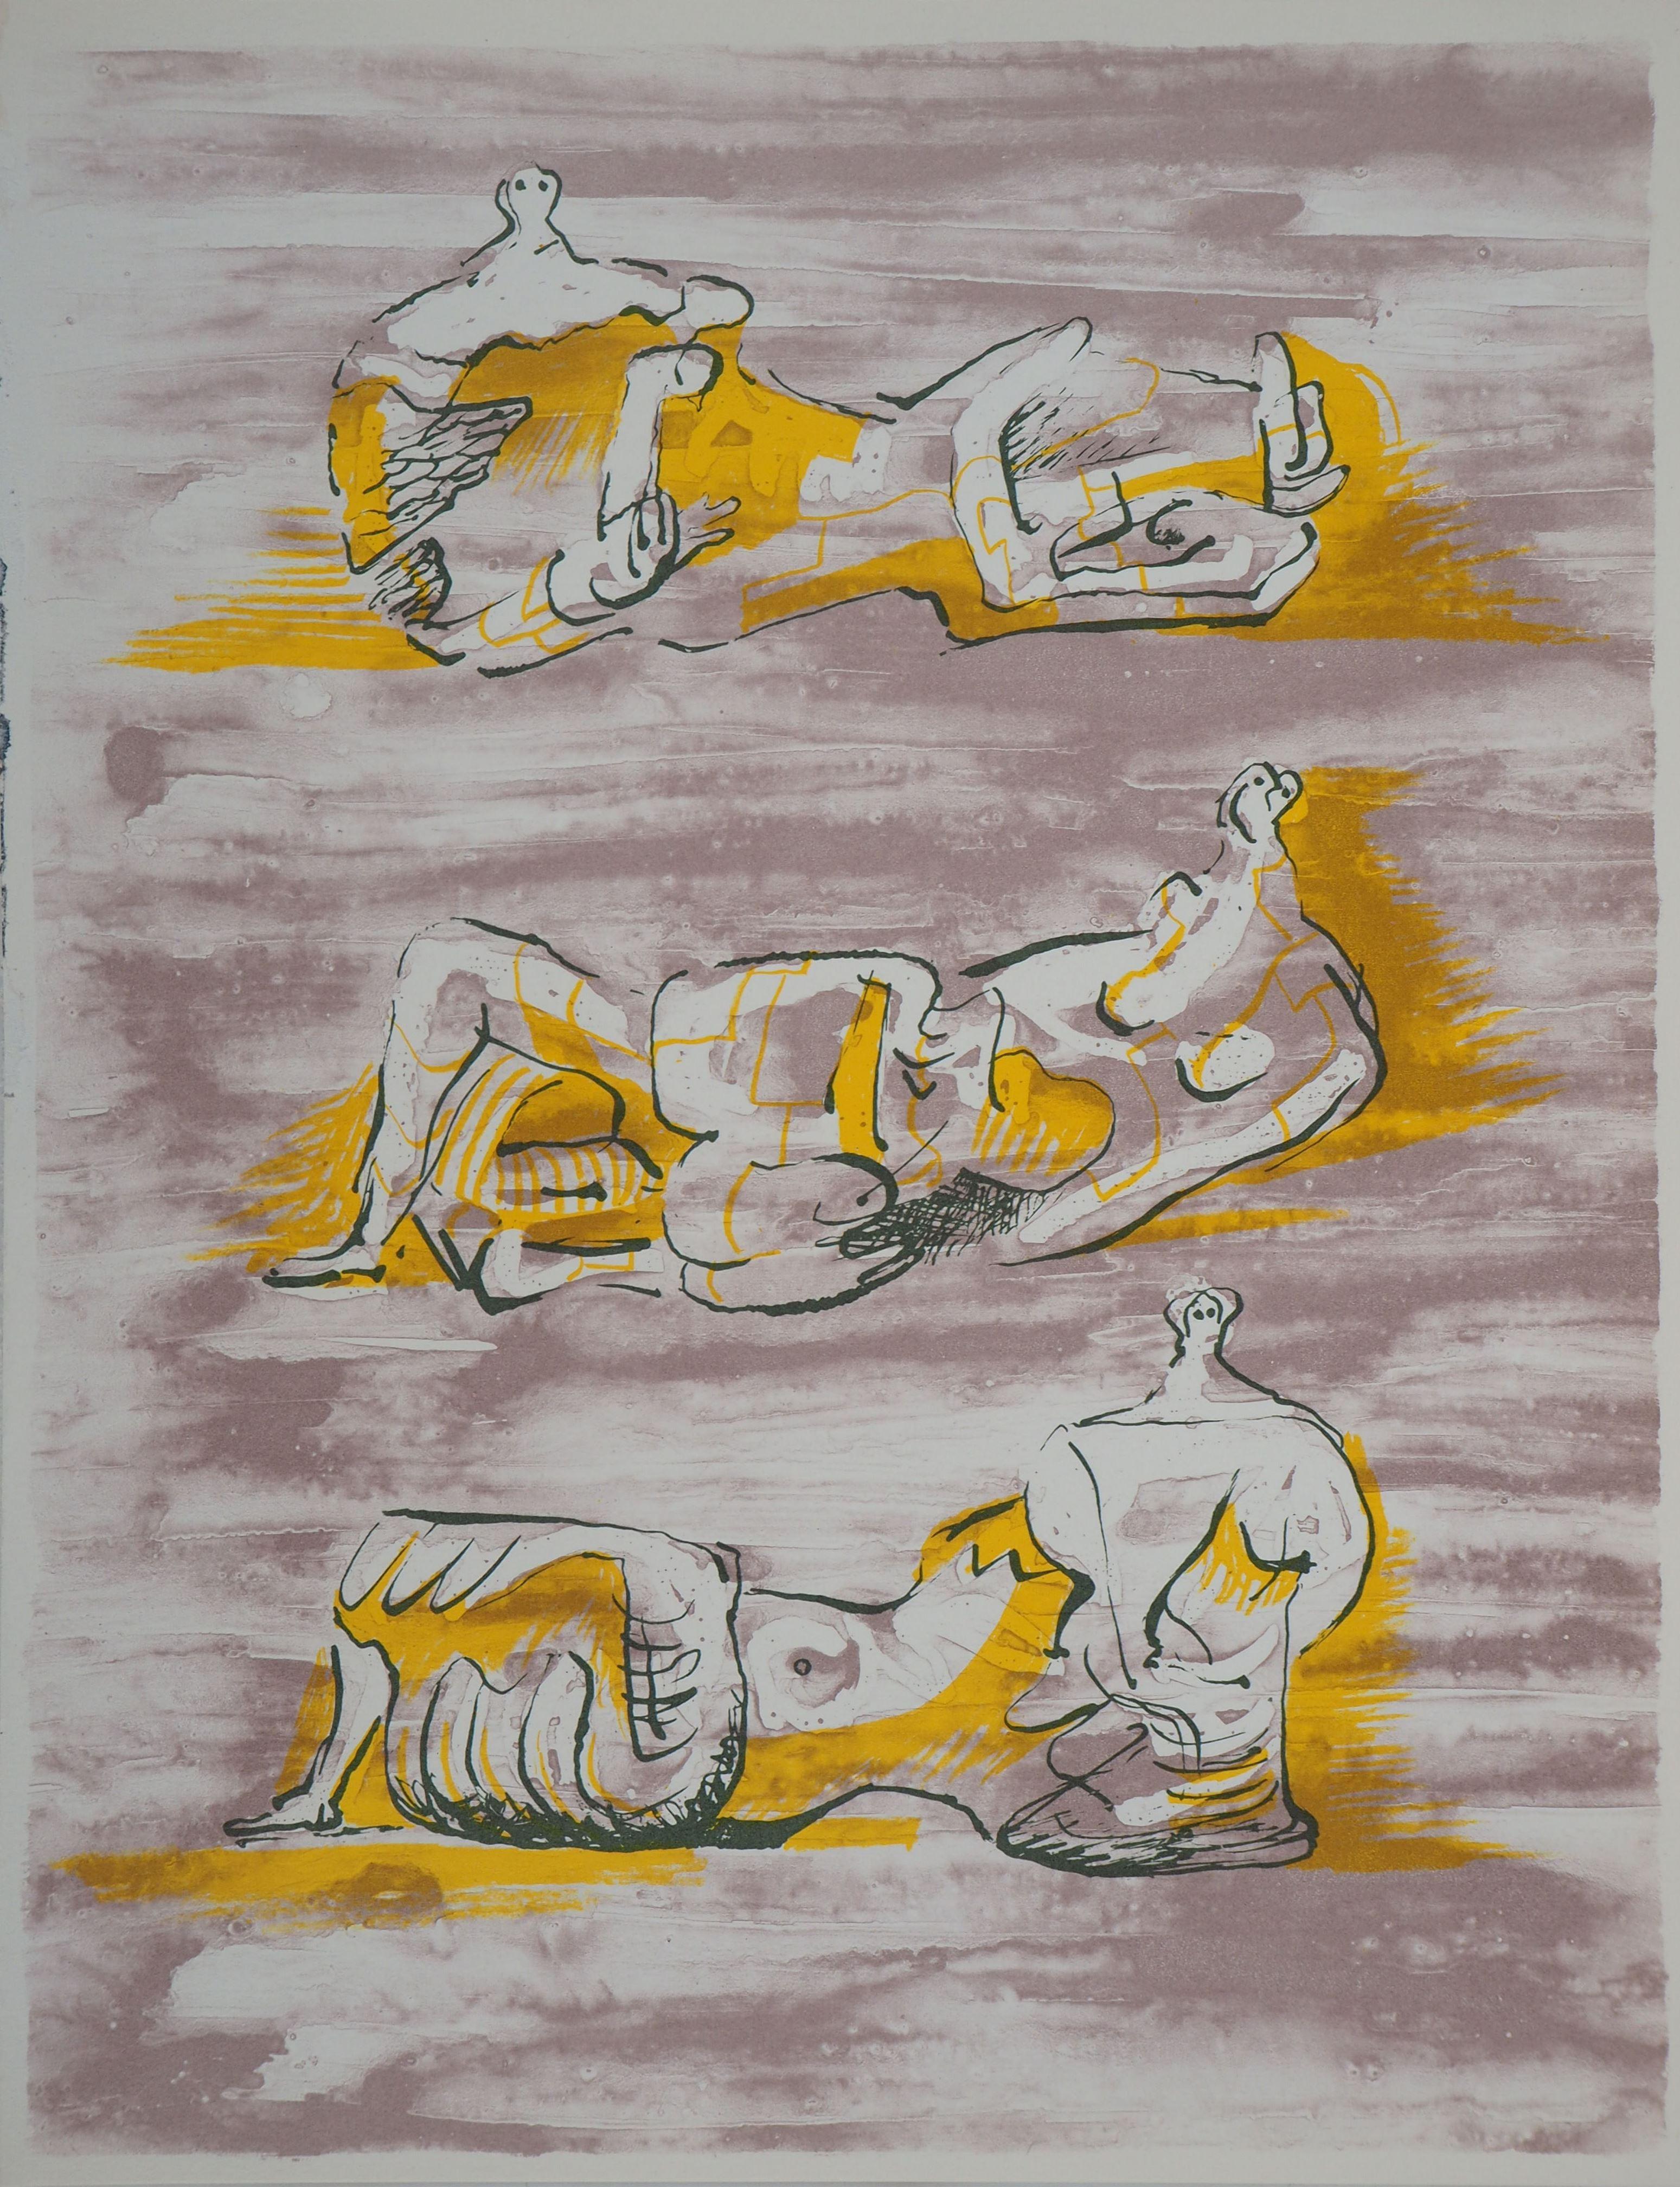 Three Reclining Nudes - Original lithograph